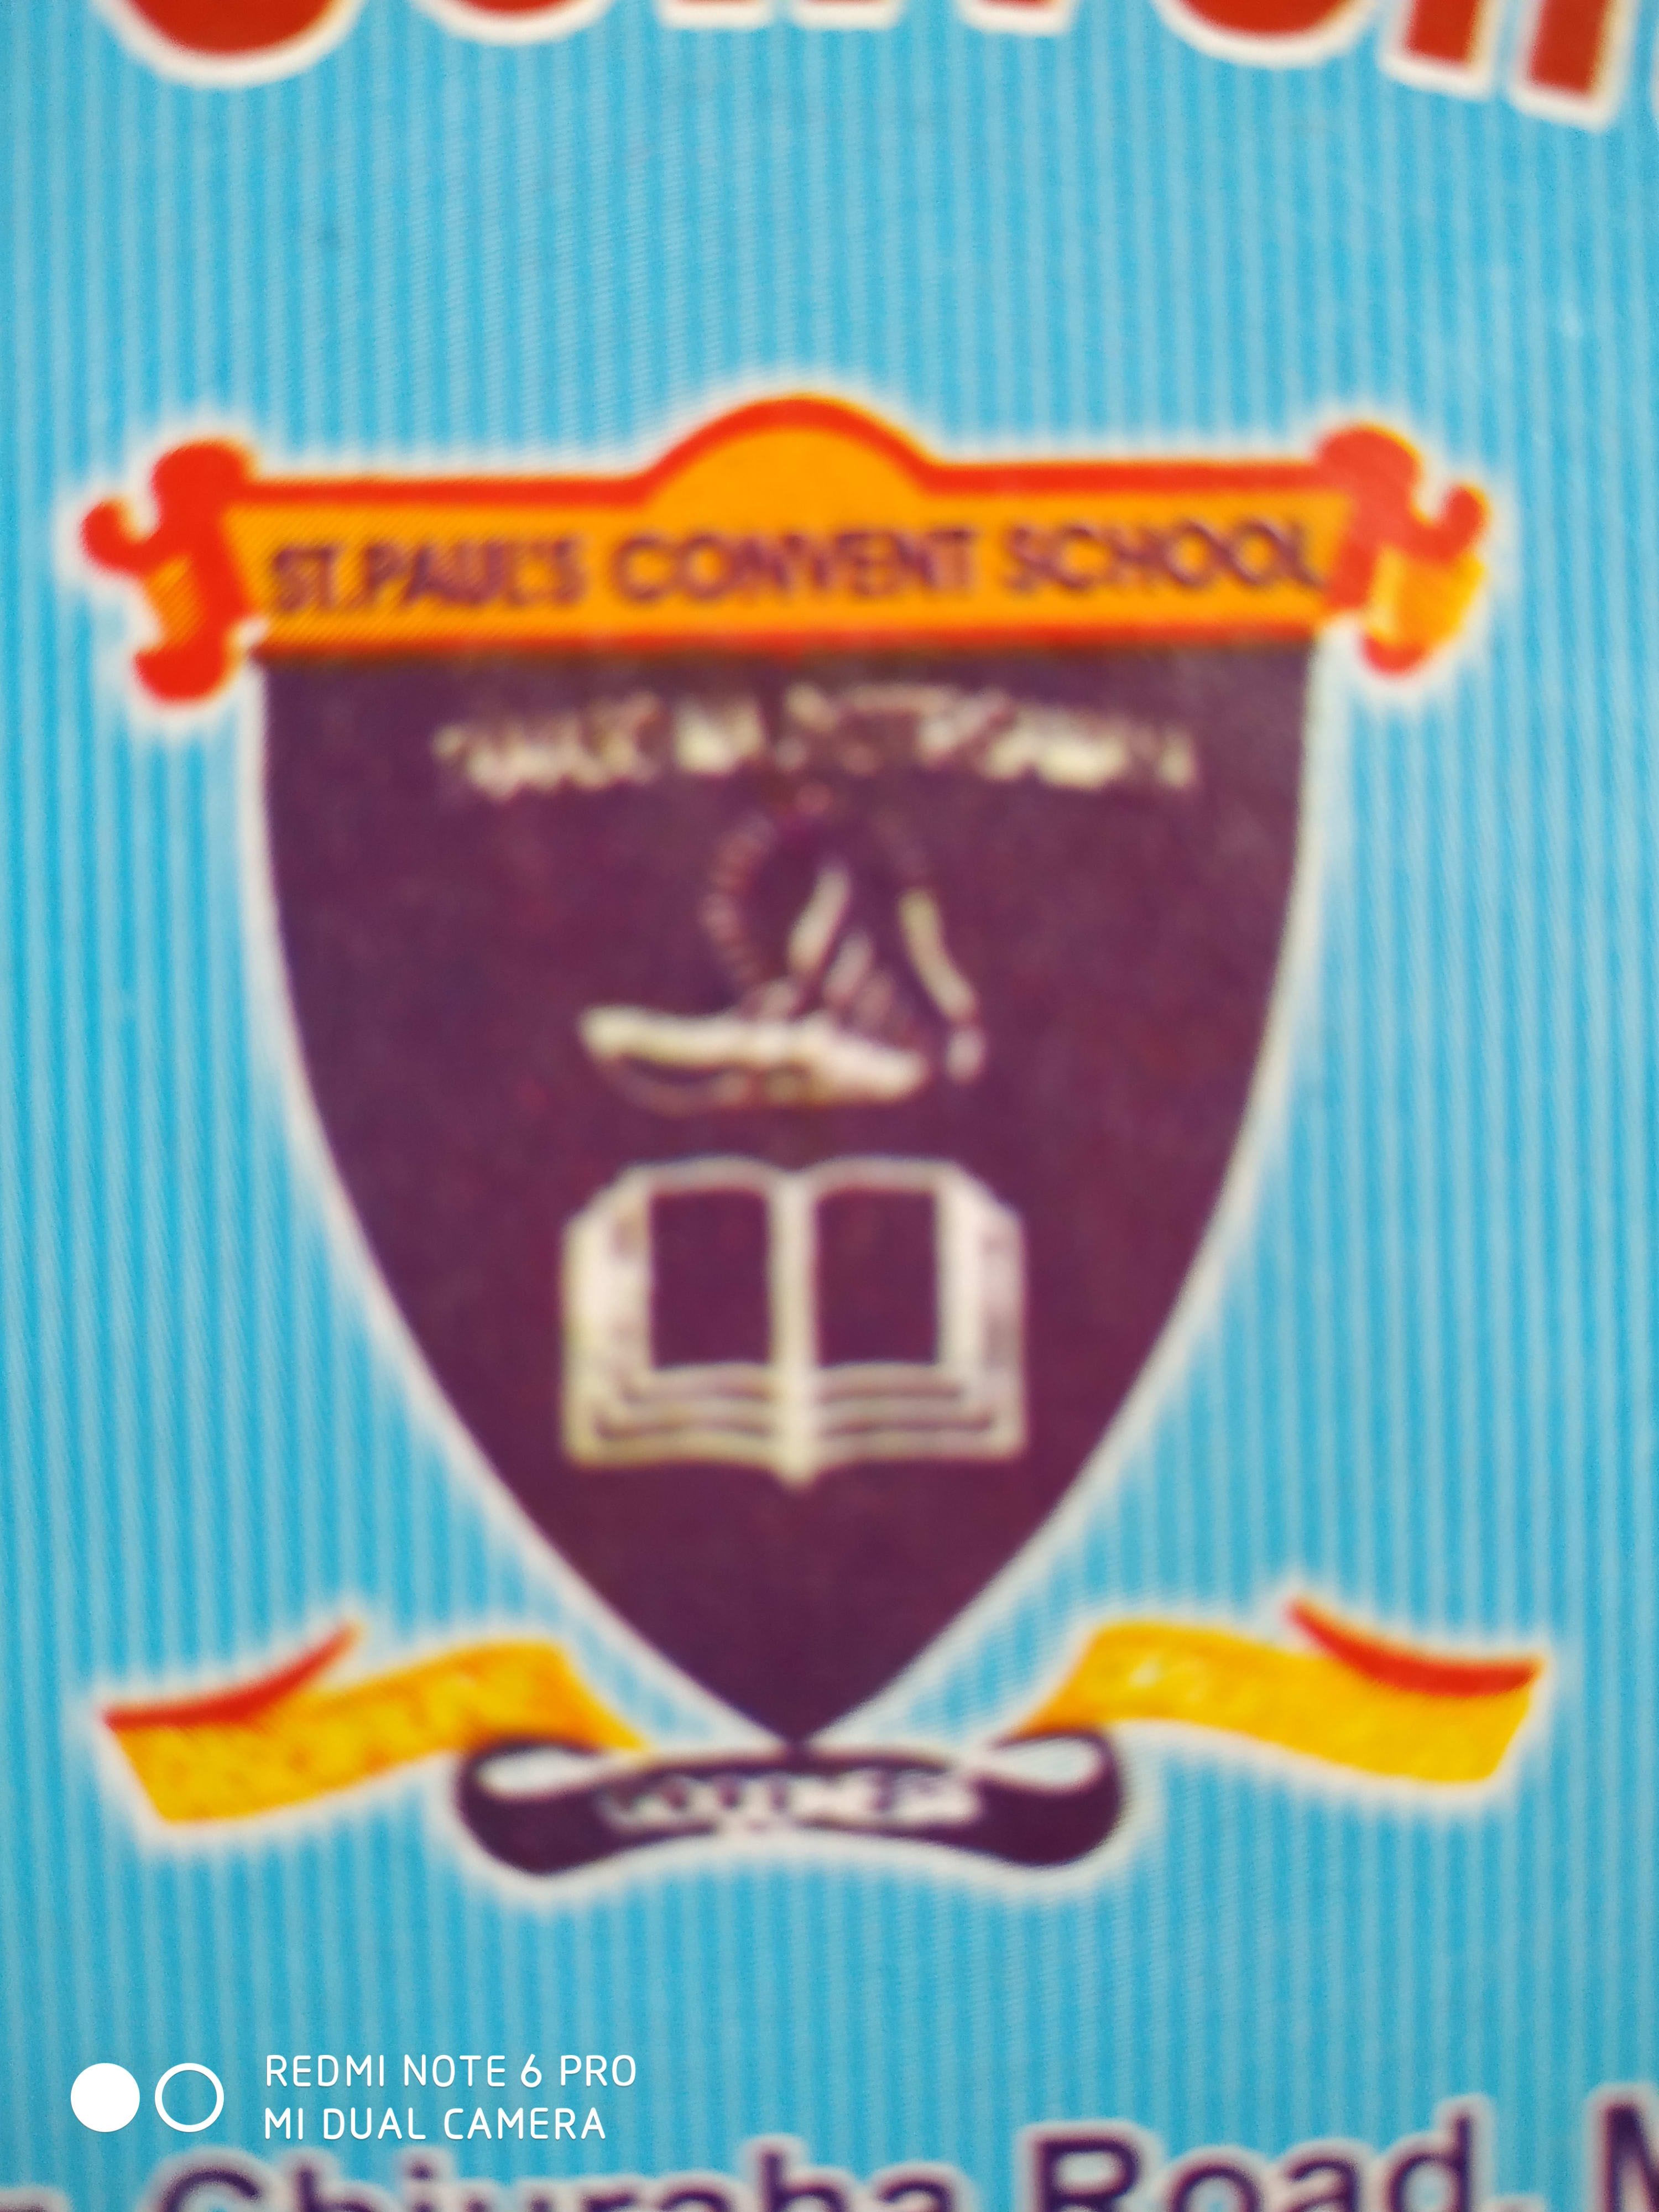 St. Paul's Convent School